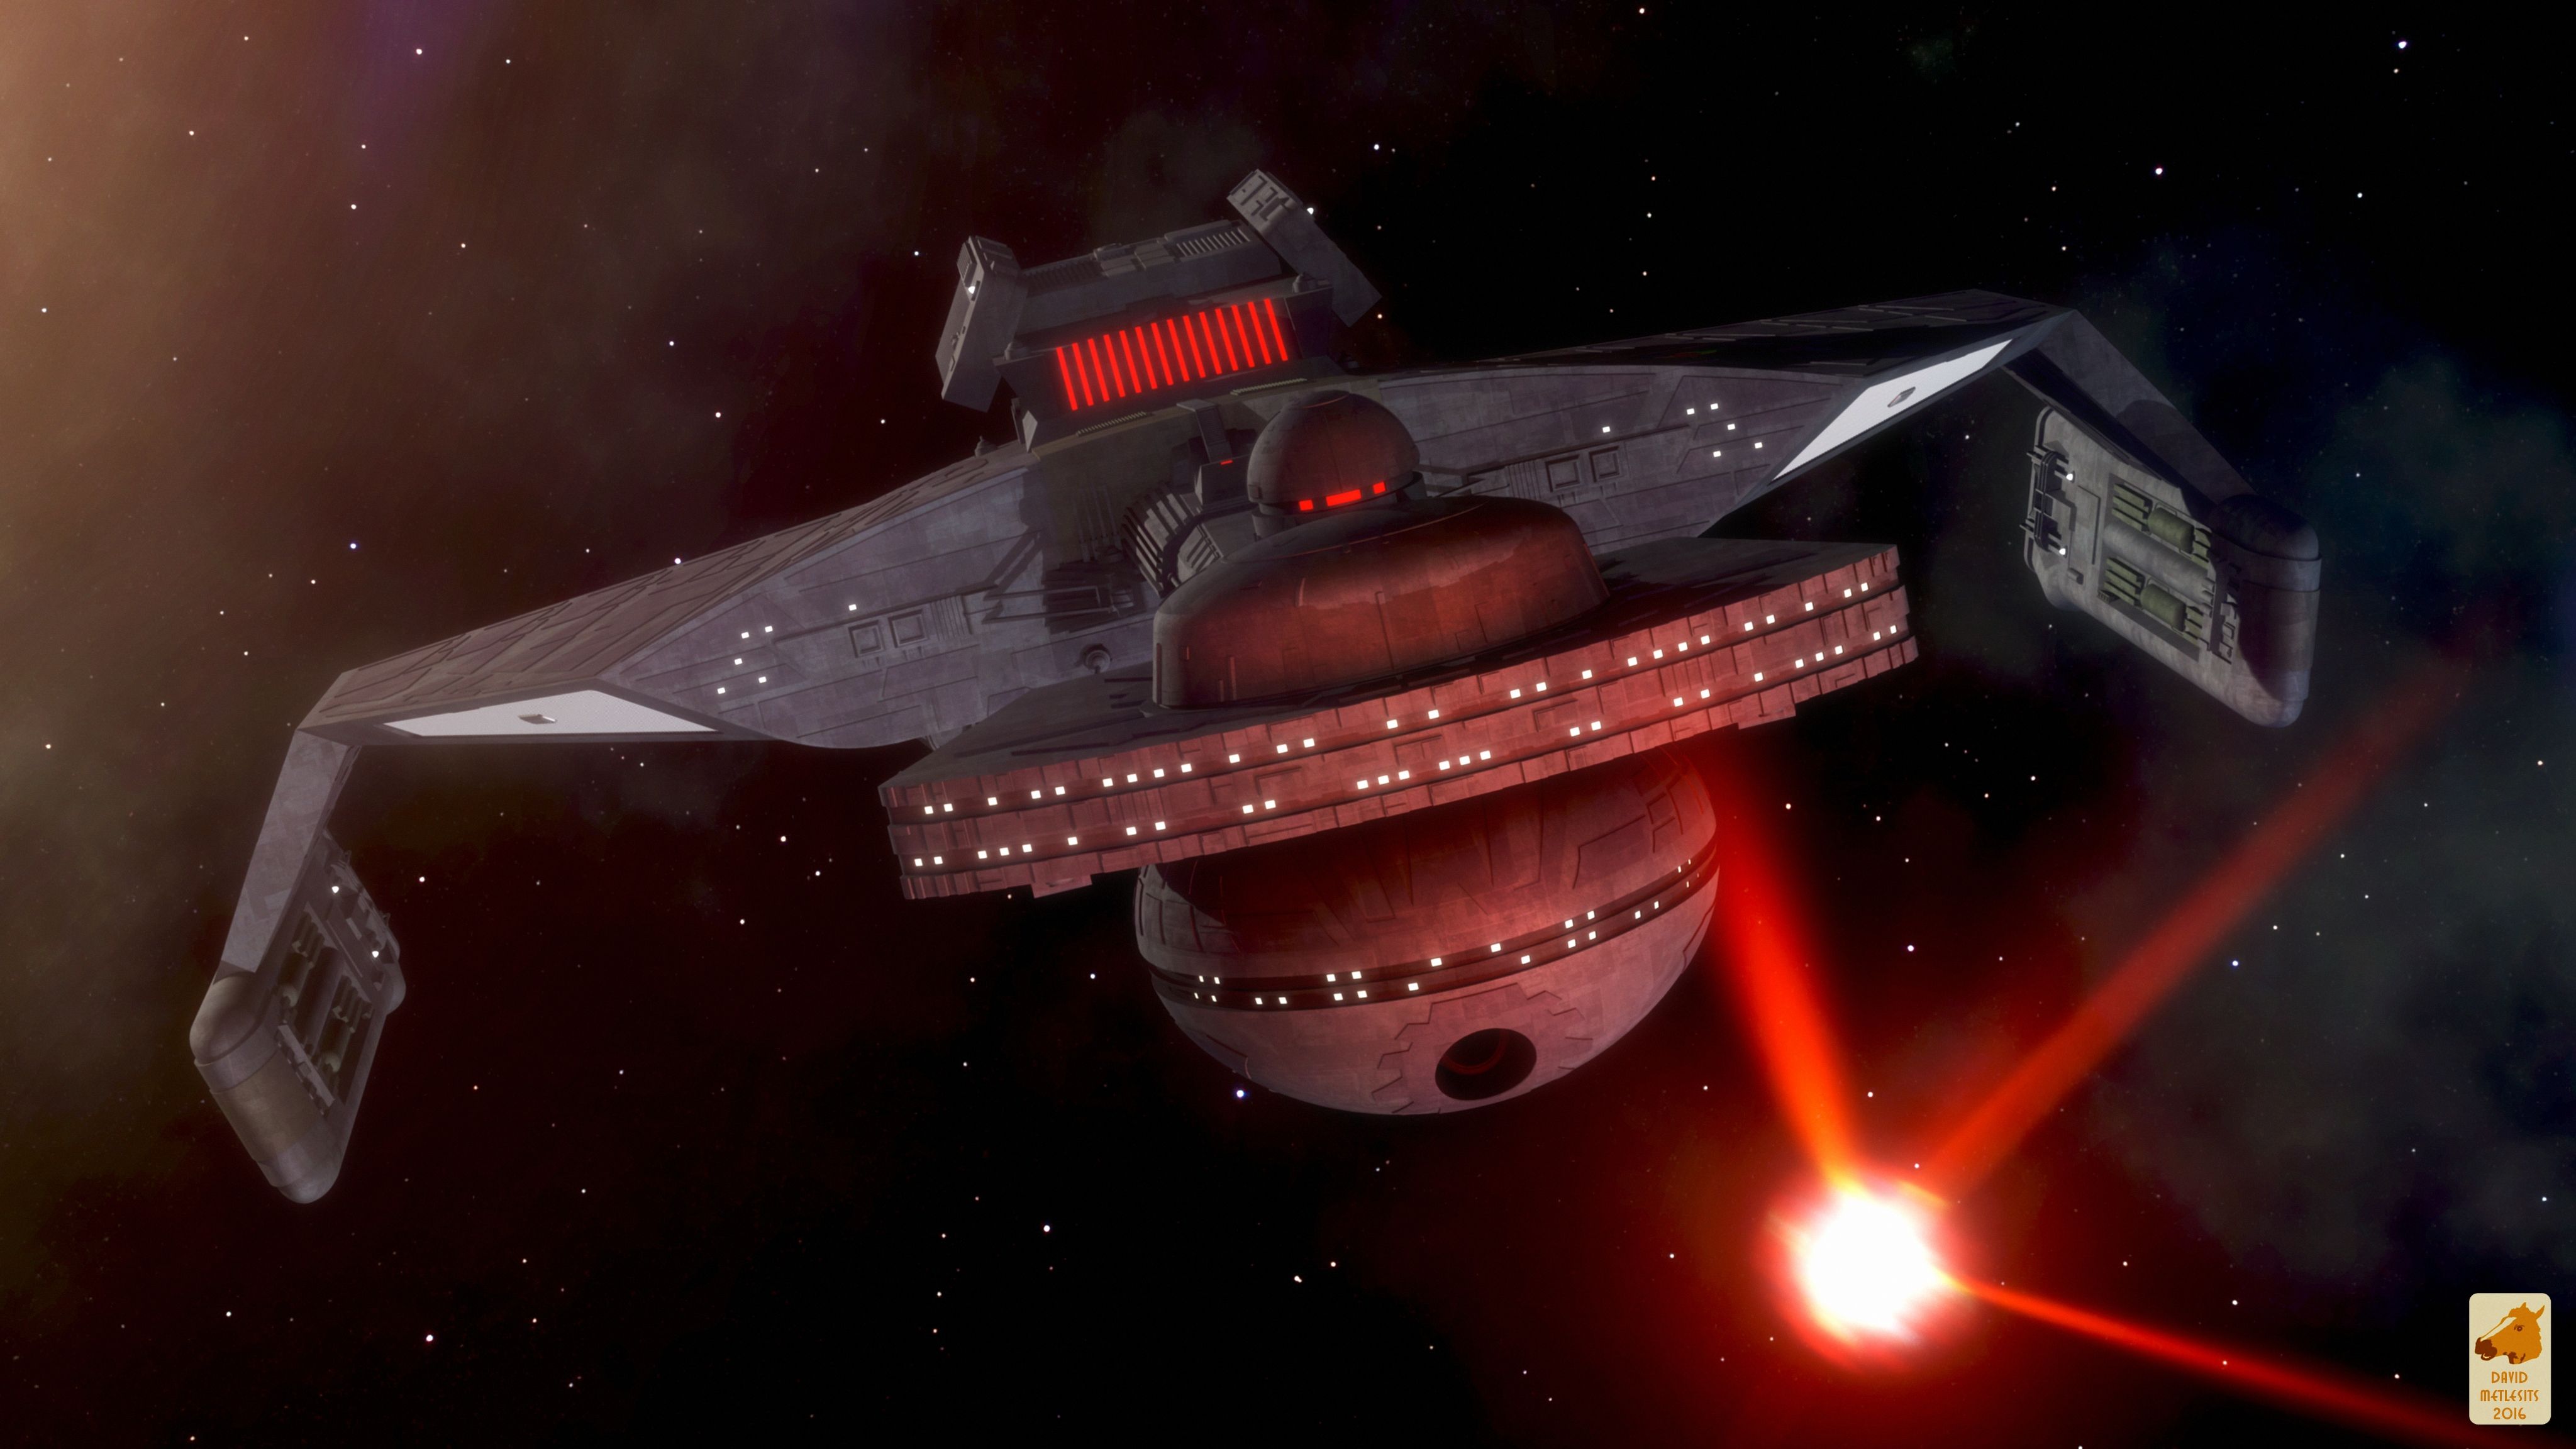 General 4096x2304 Klingon Battlecruiser Star Trek science fiction vehicle spaceship Star Trek Ships D7 Class TV series